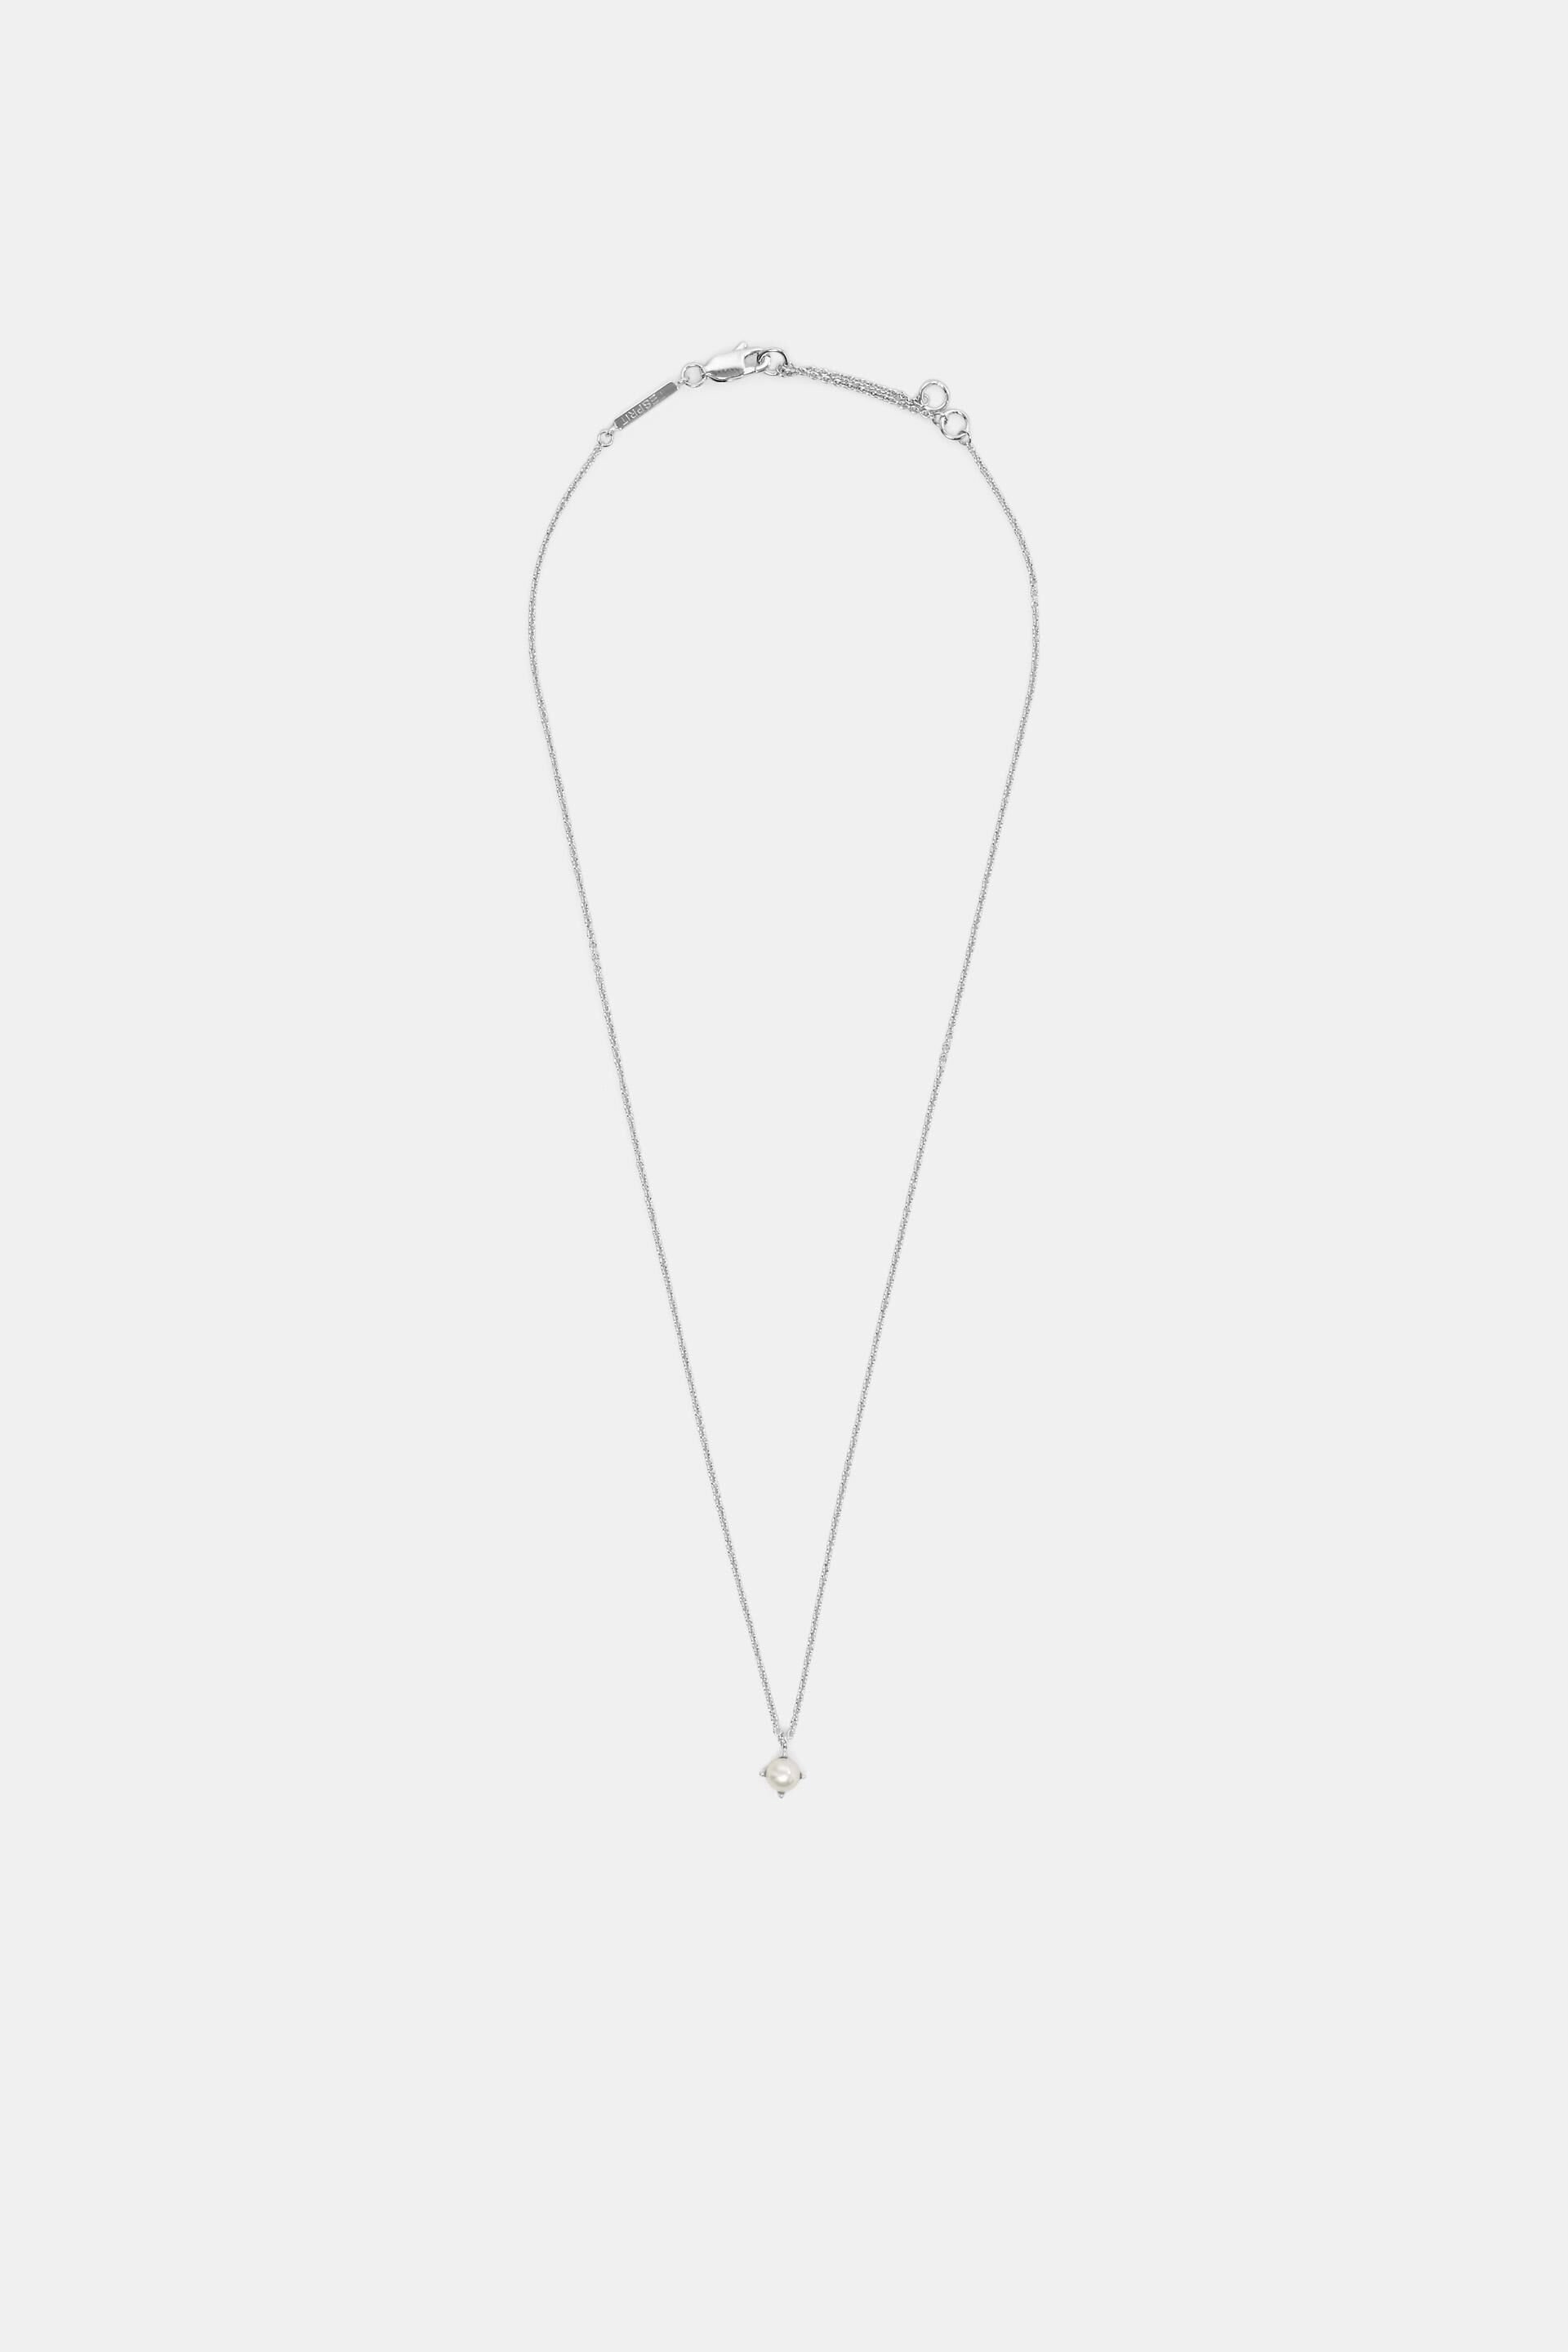 Esprit Necklace Pendant Sterling Silver Dainty